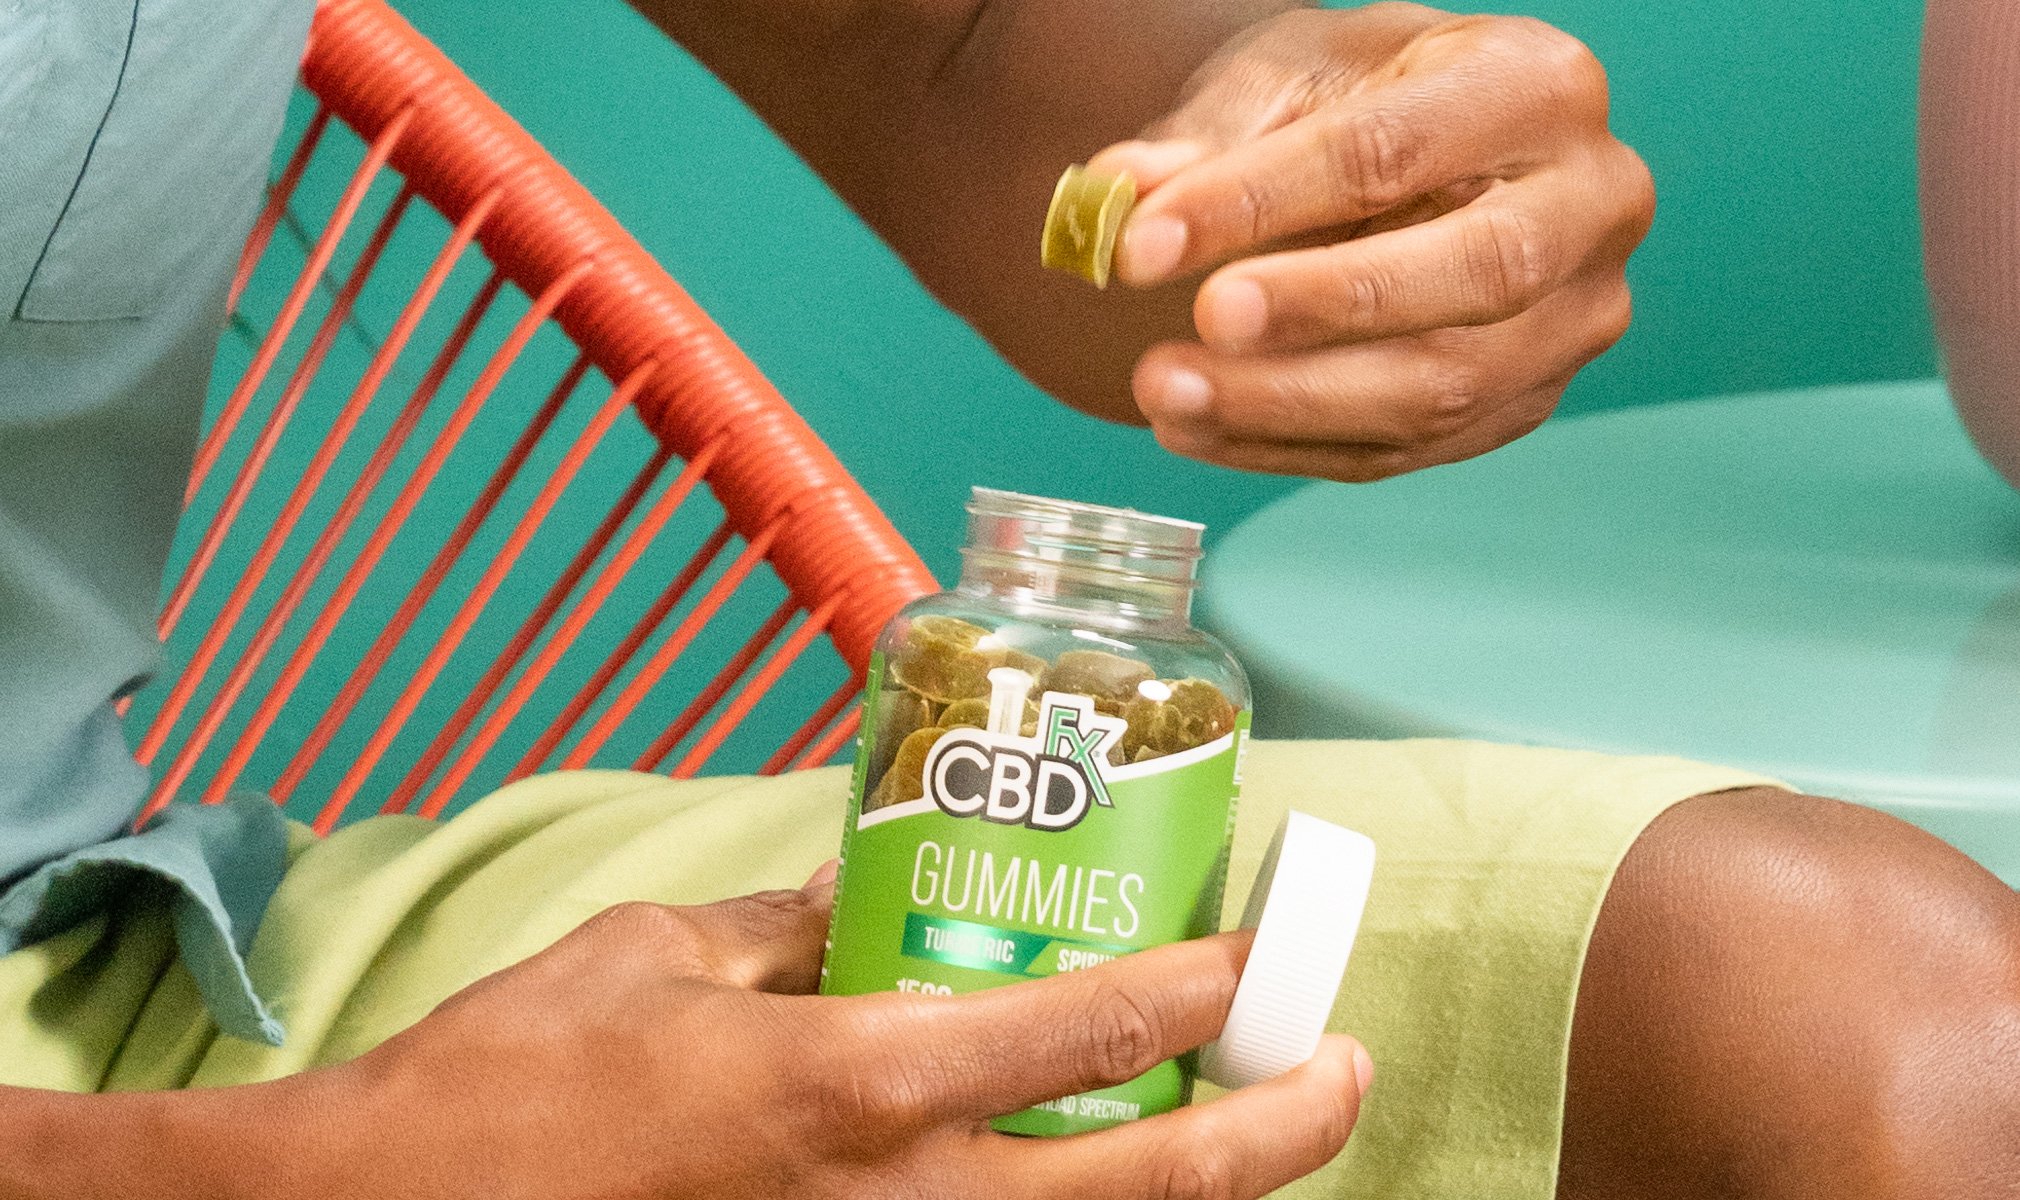 cbdfx-us-blog-Do-CBD-Gummies-Have-THC-in-Them.jpg